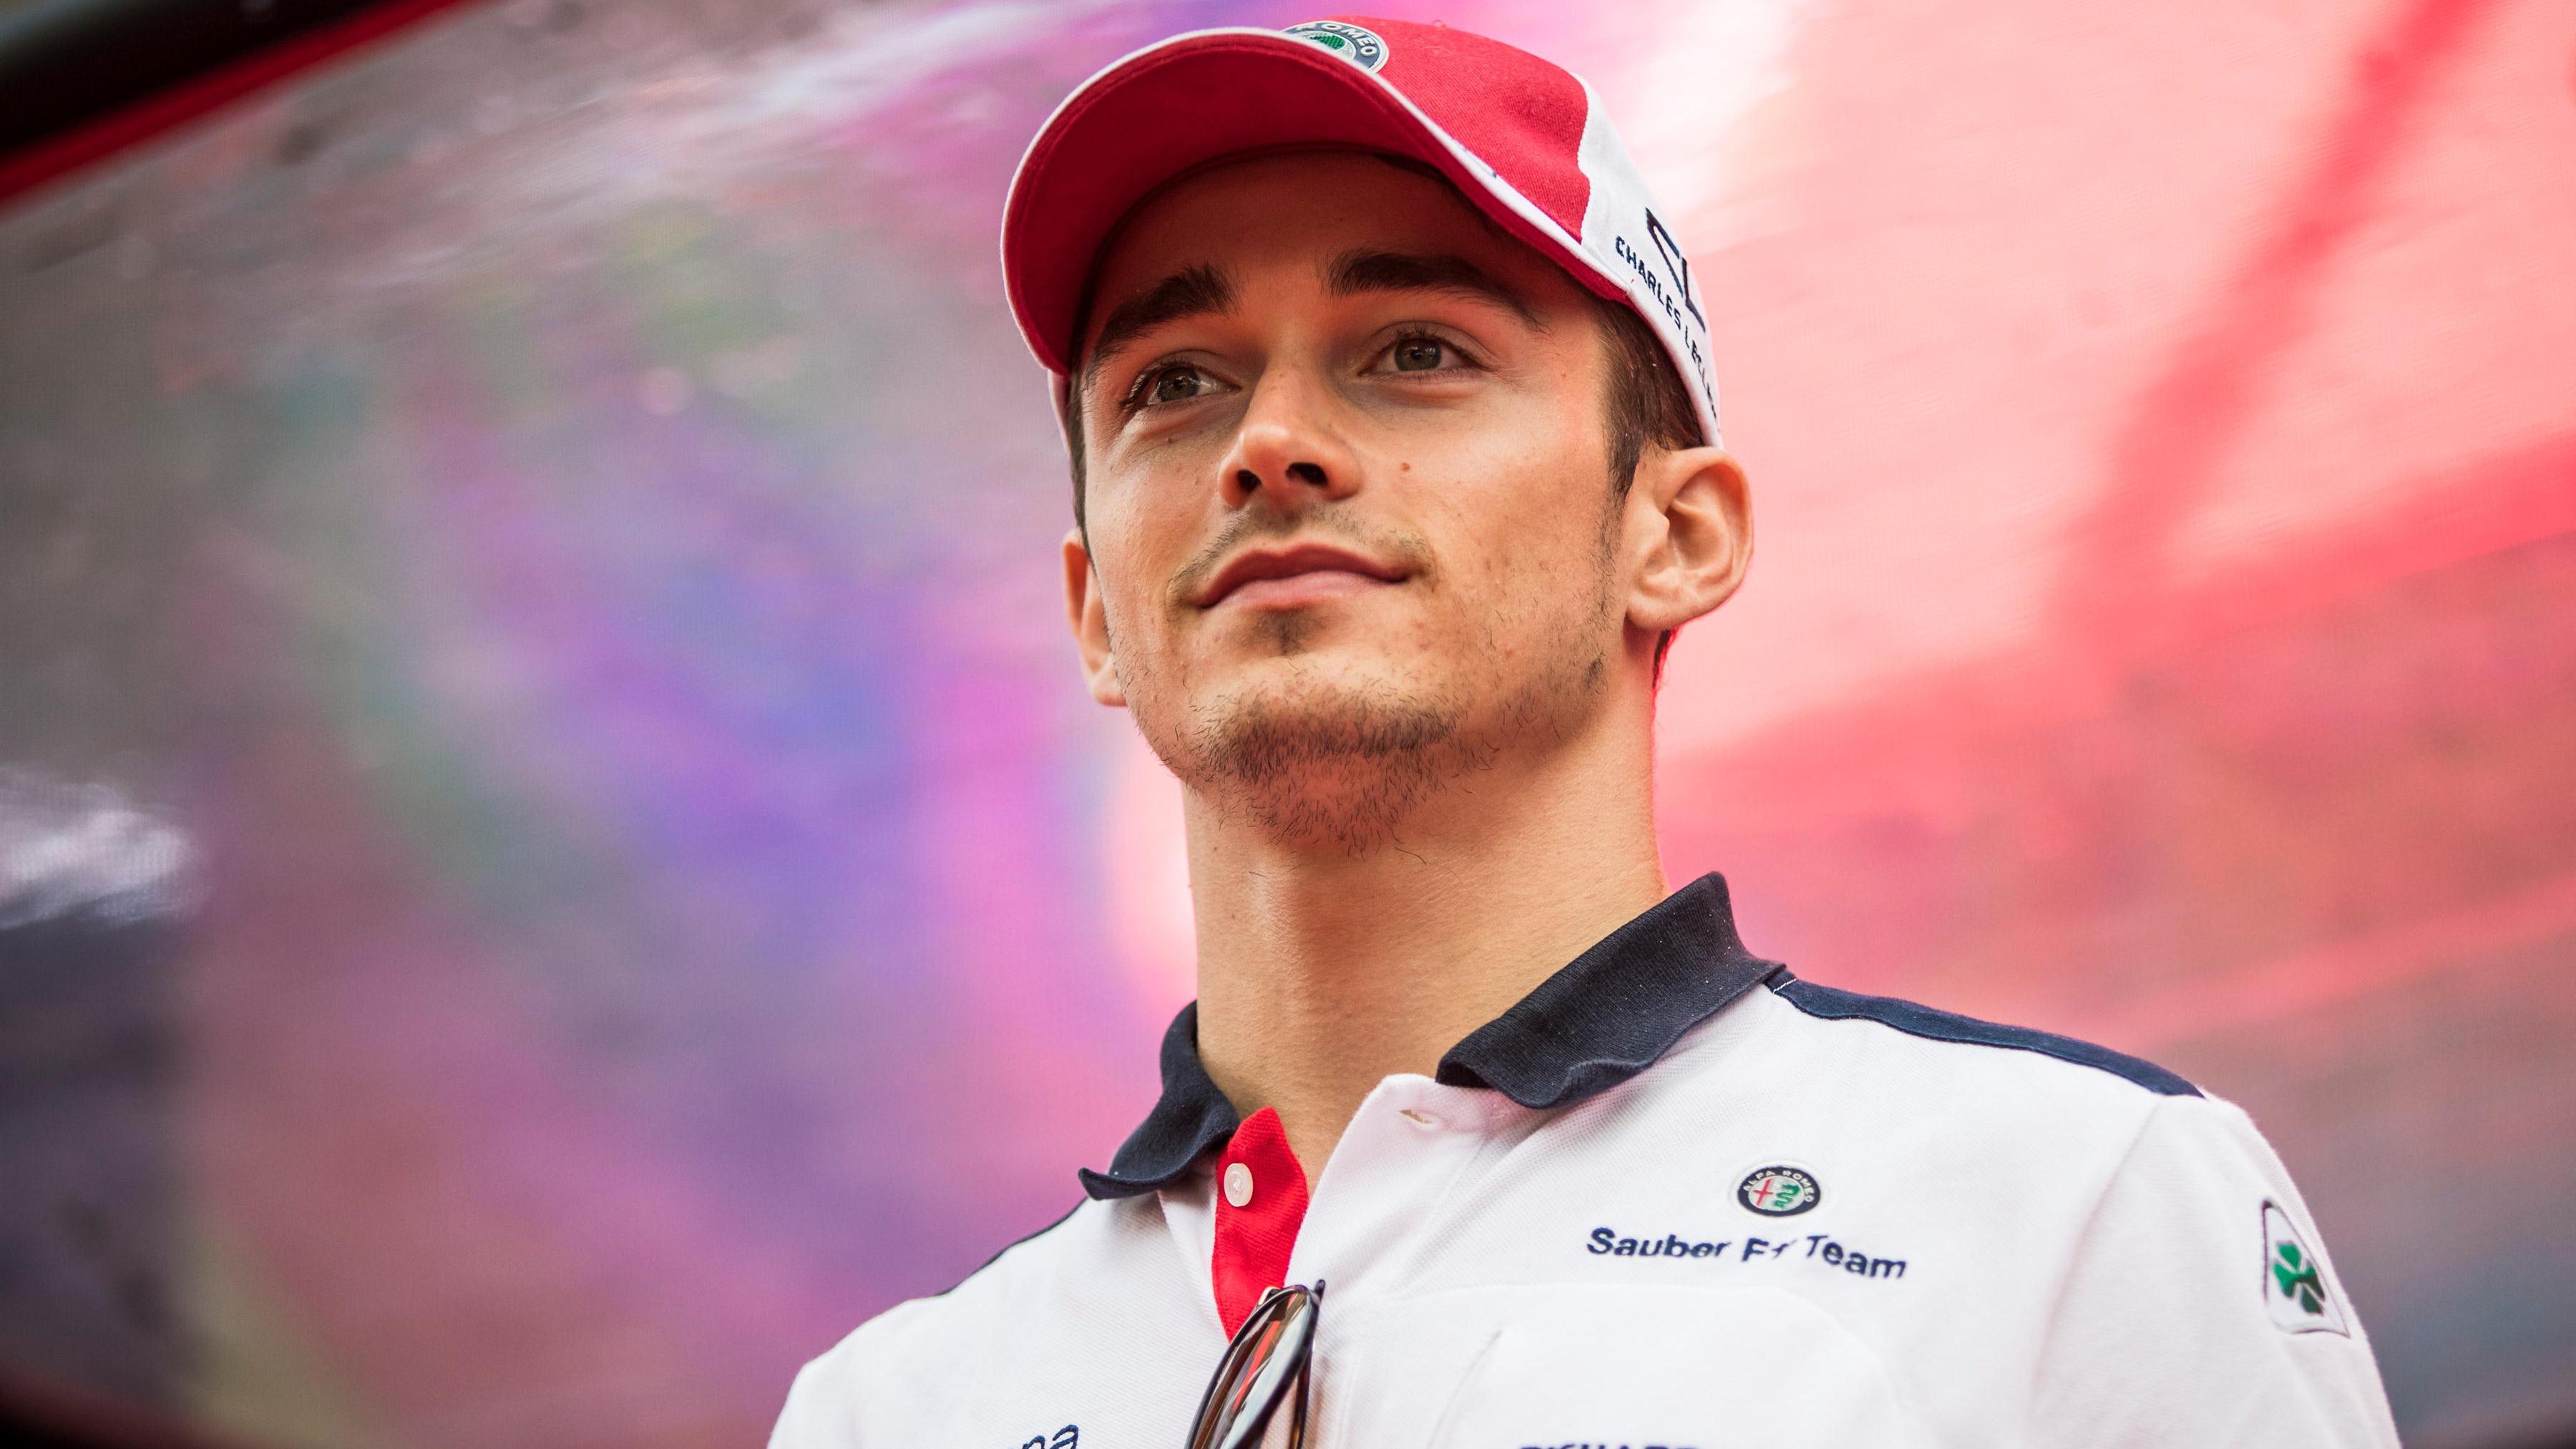 Leclerc to replace Raikkonen at Ferrari for 2019